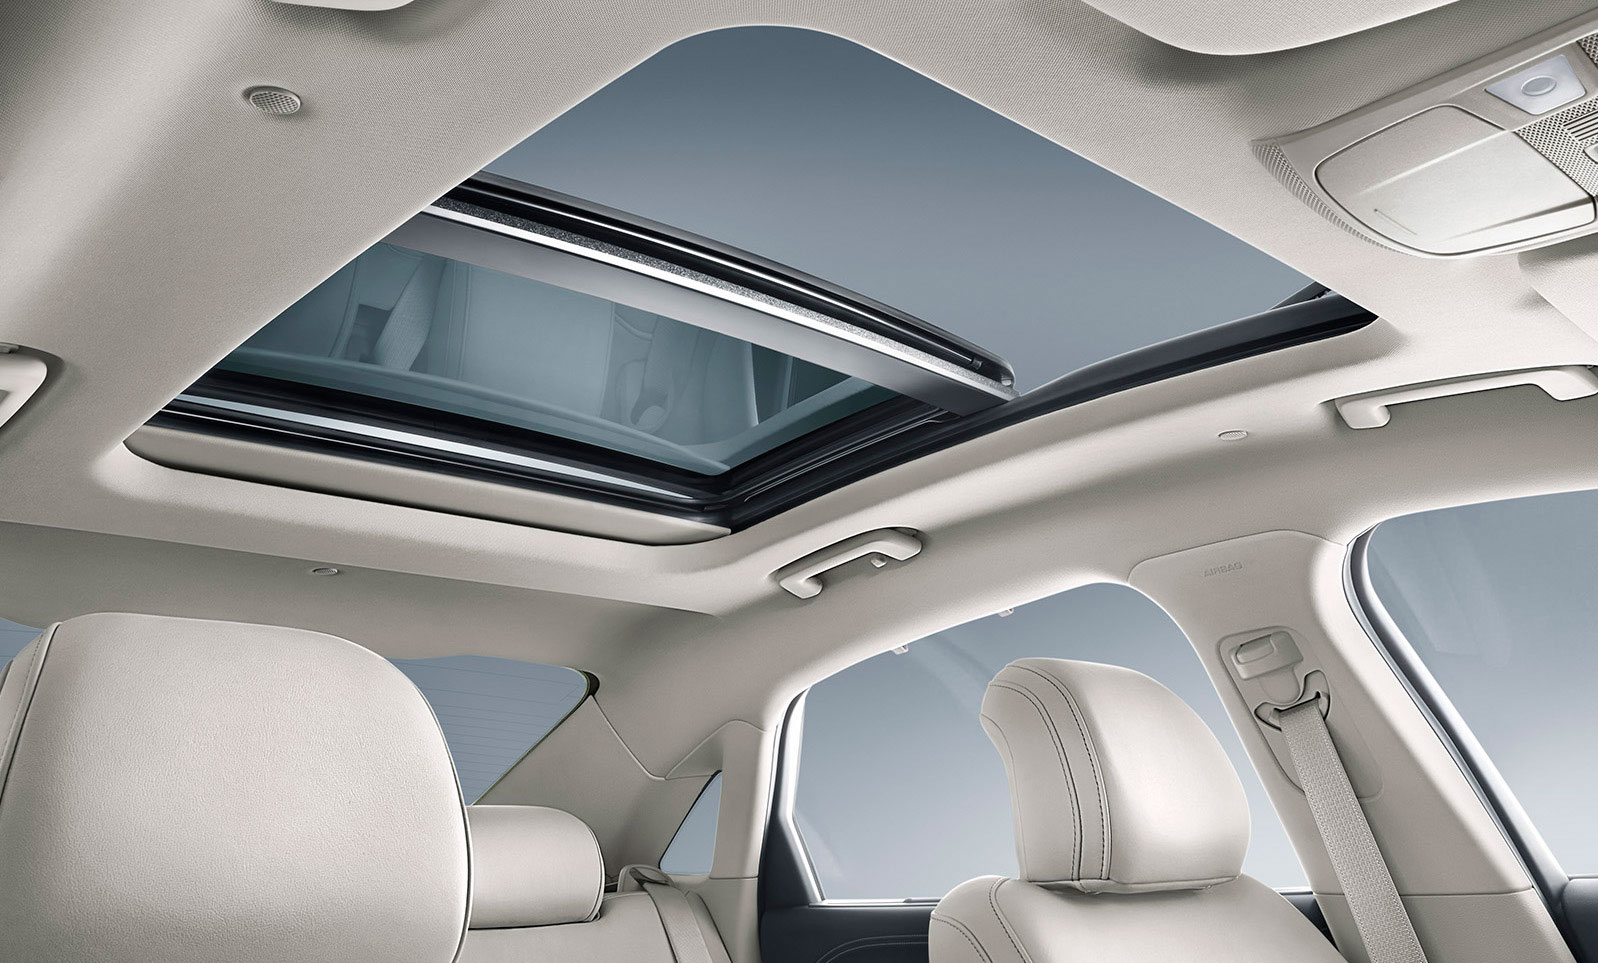 New Ford Taurus Interior - Panoramic sunroof - Car Body Design